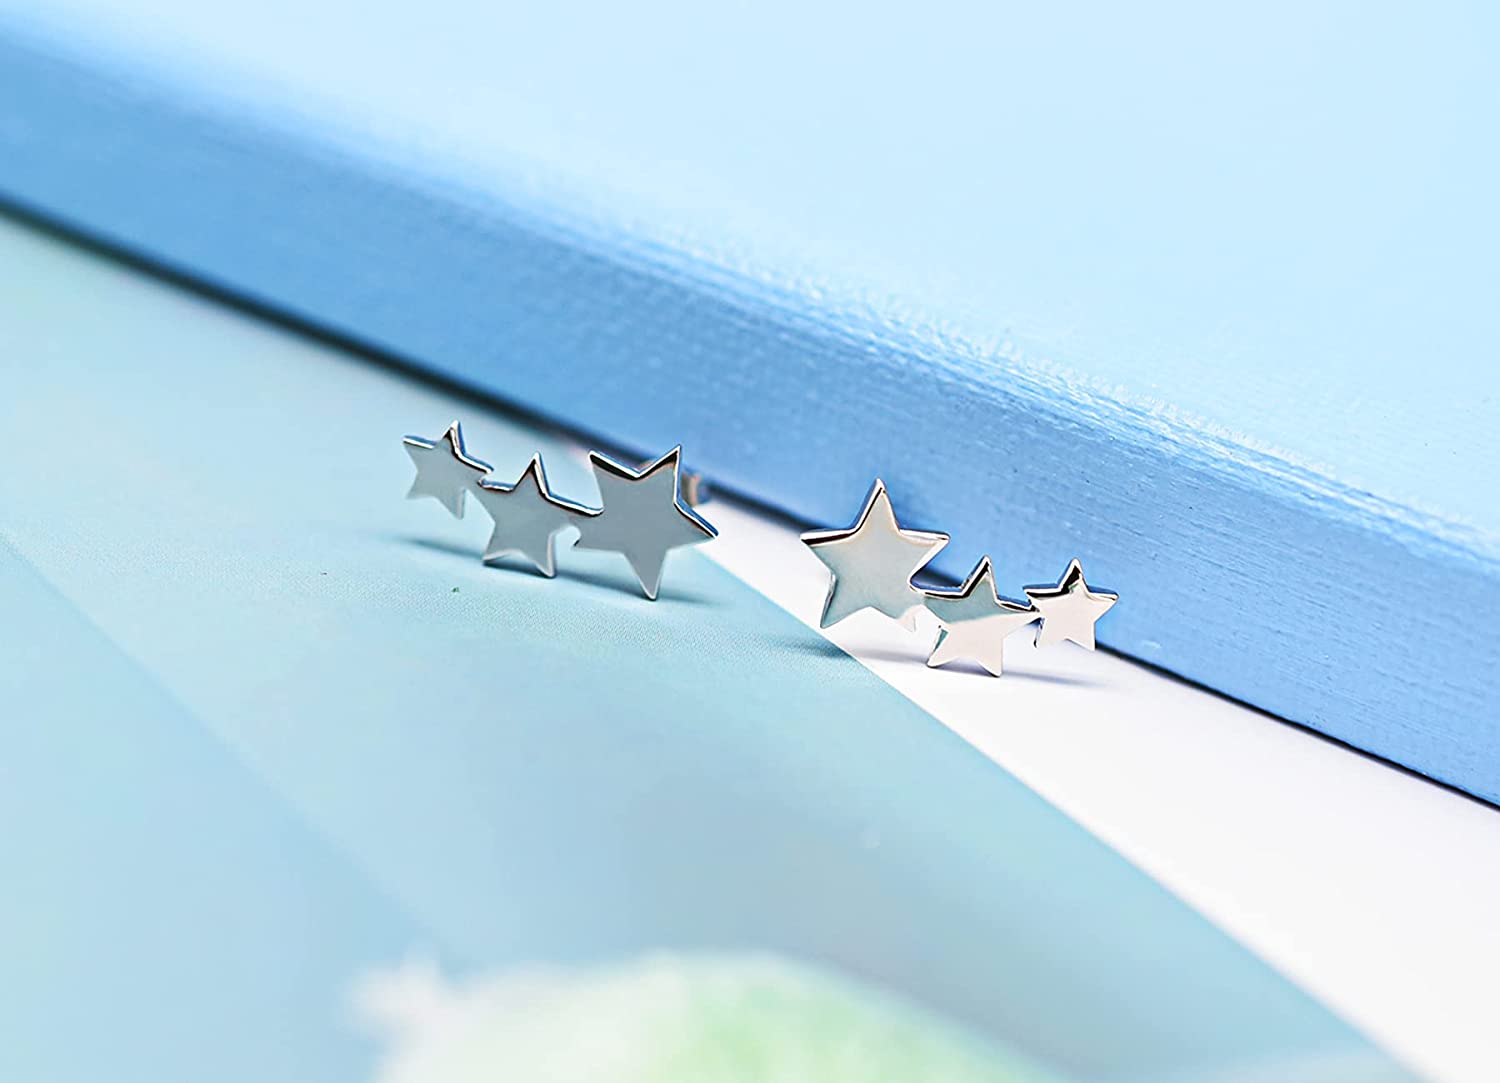 Sterling Silver Star Stud Earrings For Girls Women - Hypoallergenic Stars Post Earrings for Girls Teens Women